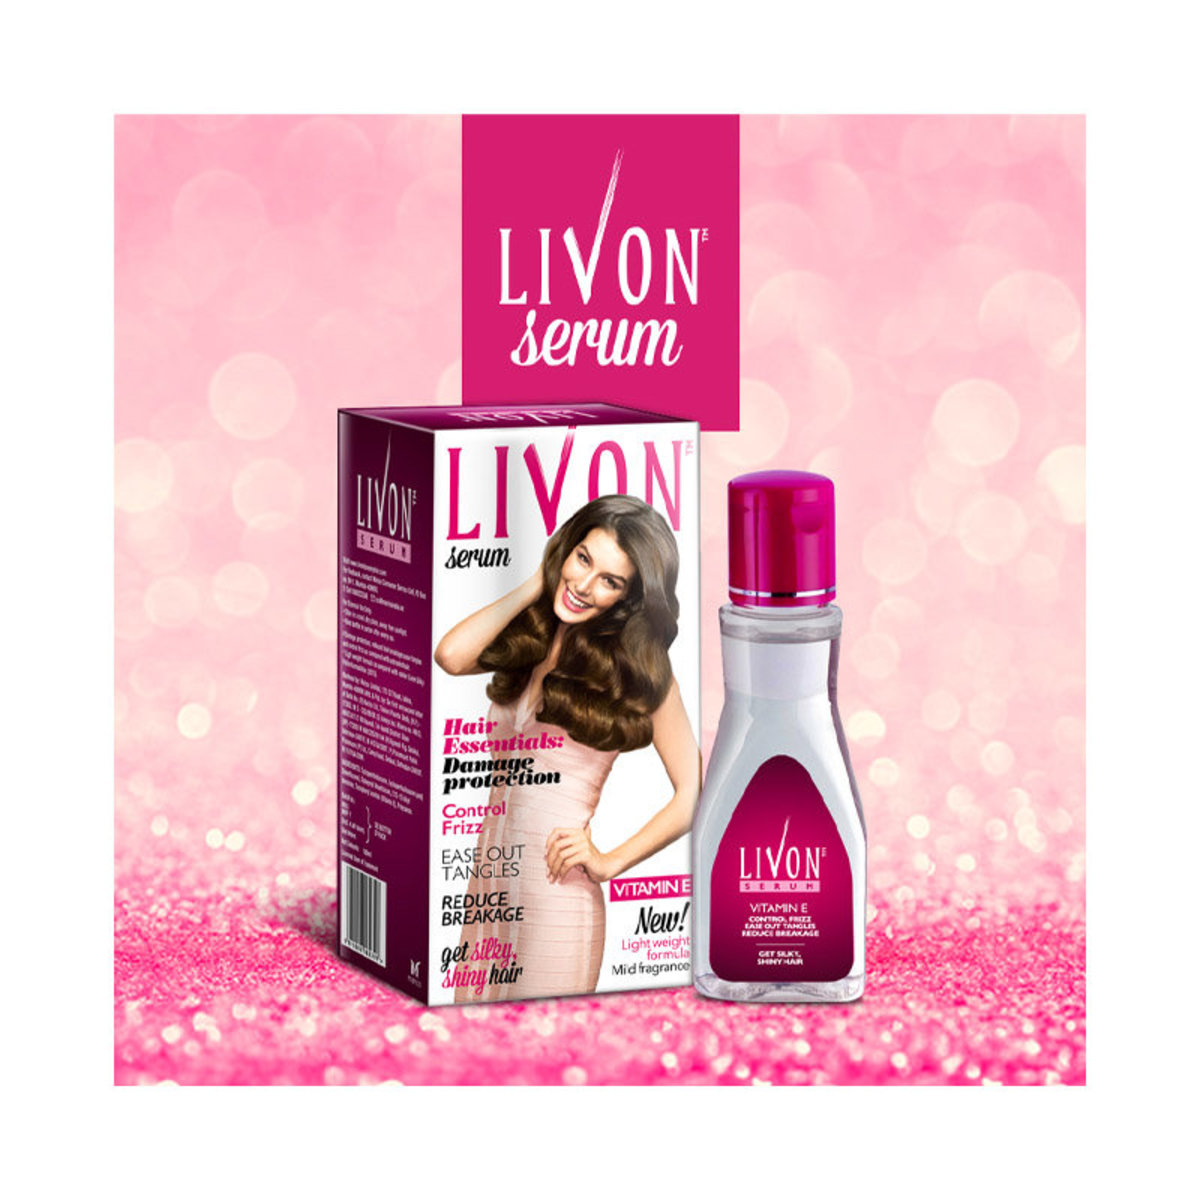 Livon | Serum 50ml | HKTVmall The Largest HK Shopping Platform